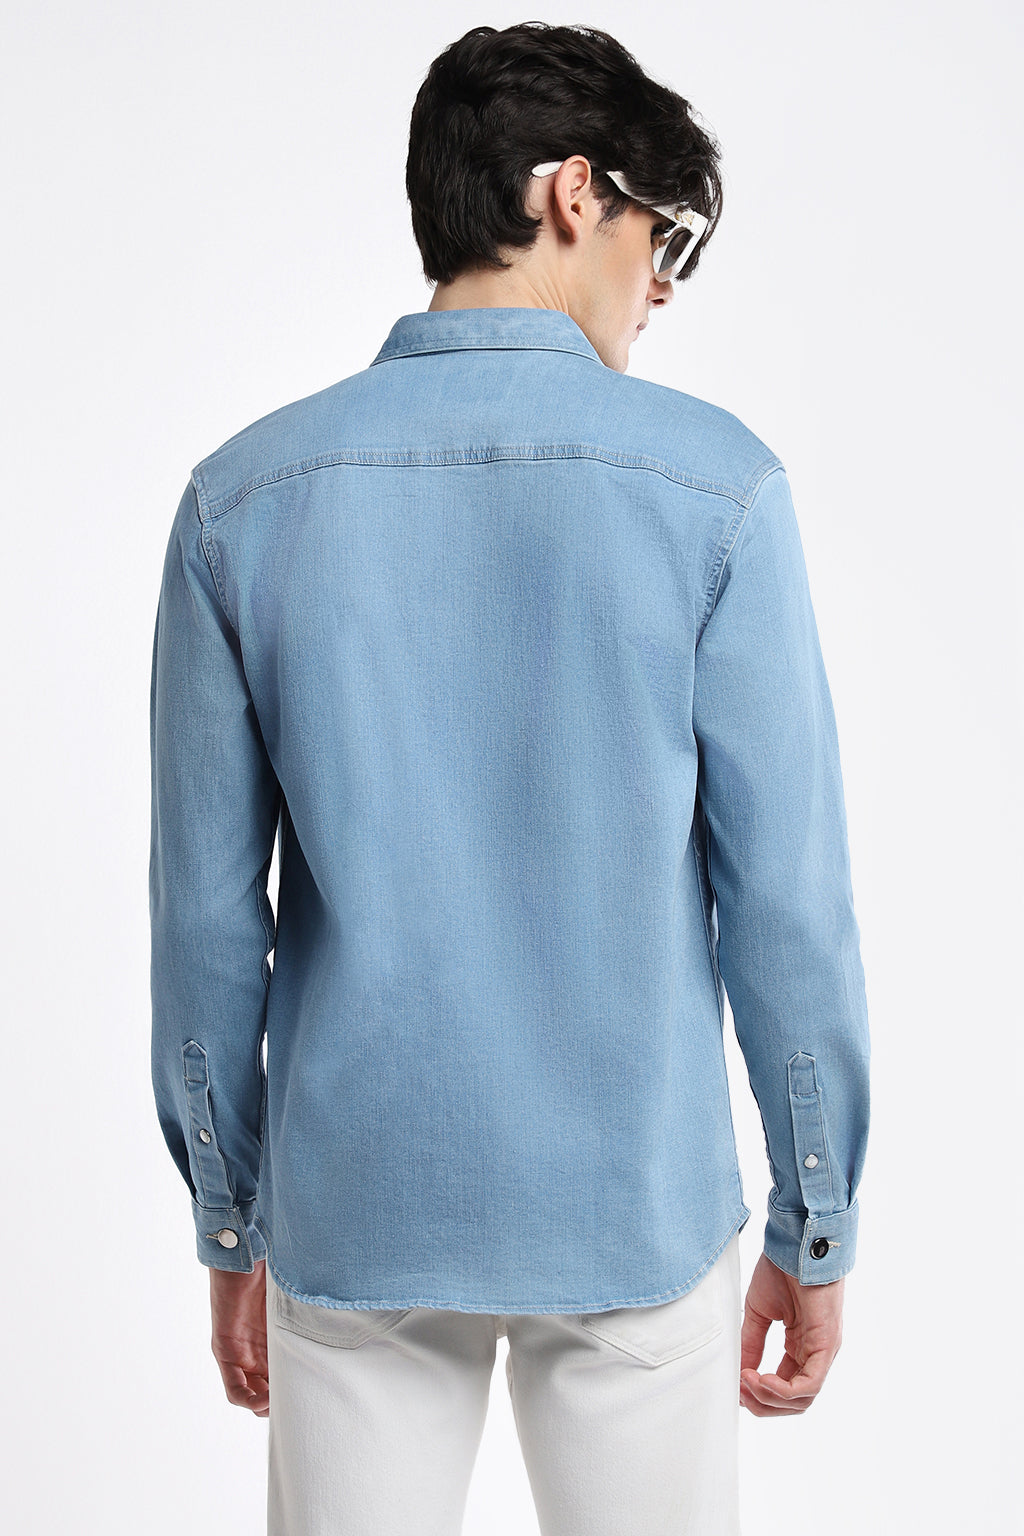 Celio Men Blue Faded Regular Fit Cotton Solid Denim Casual Shirt